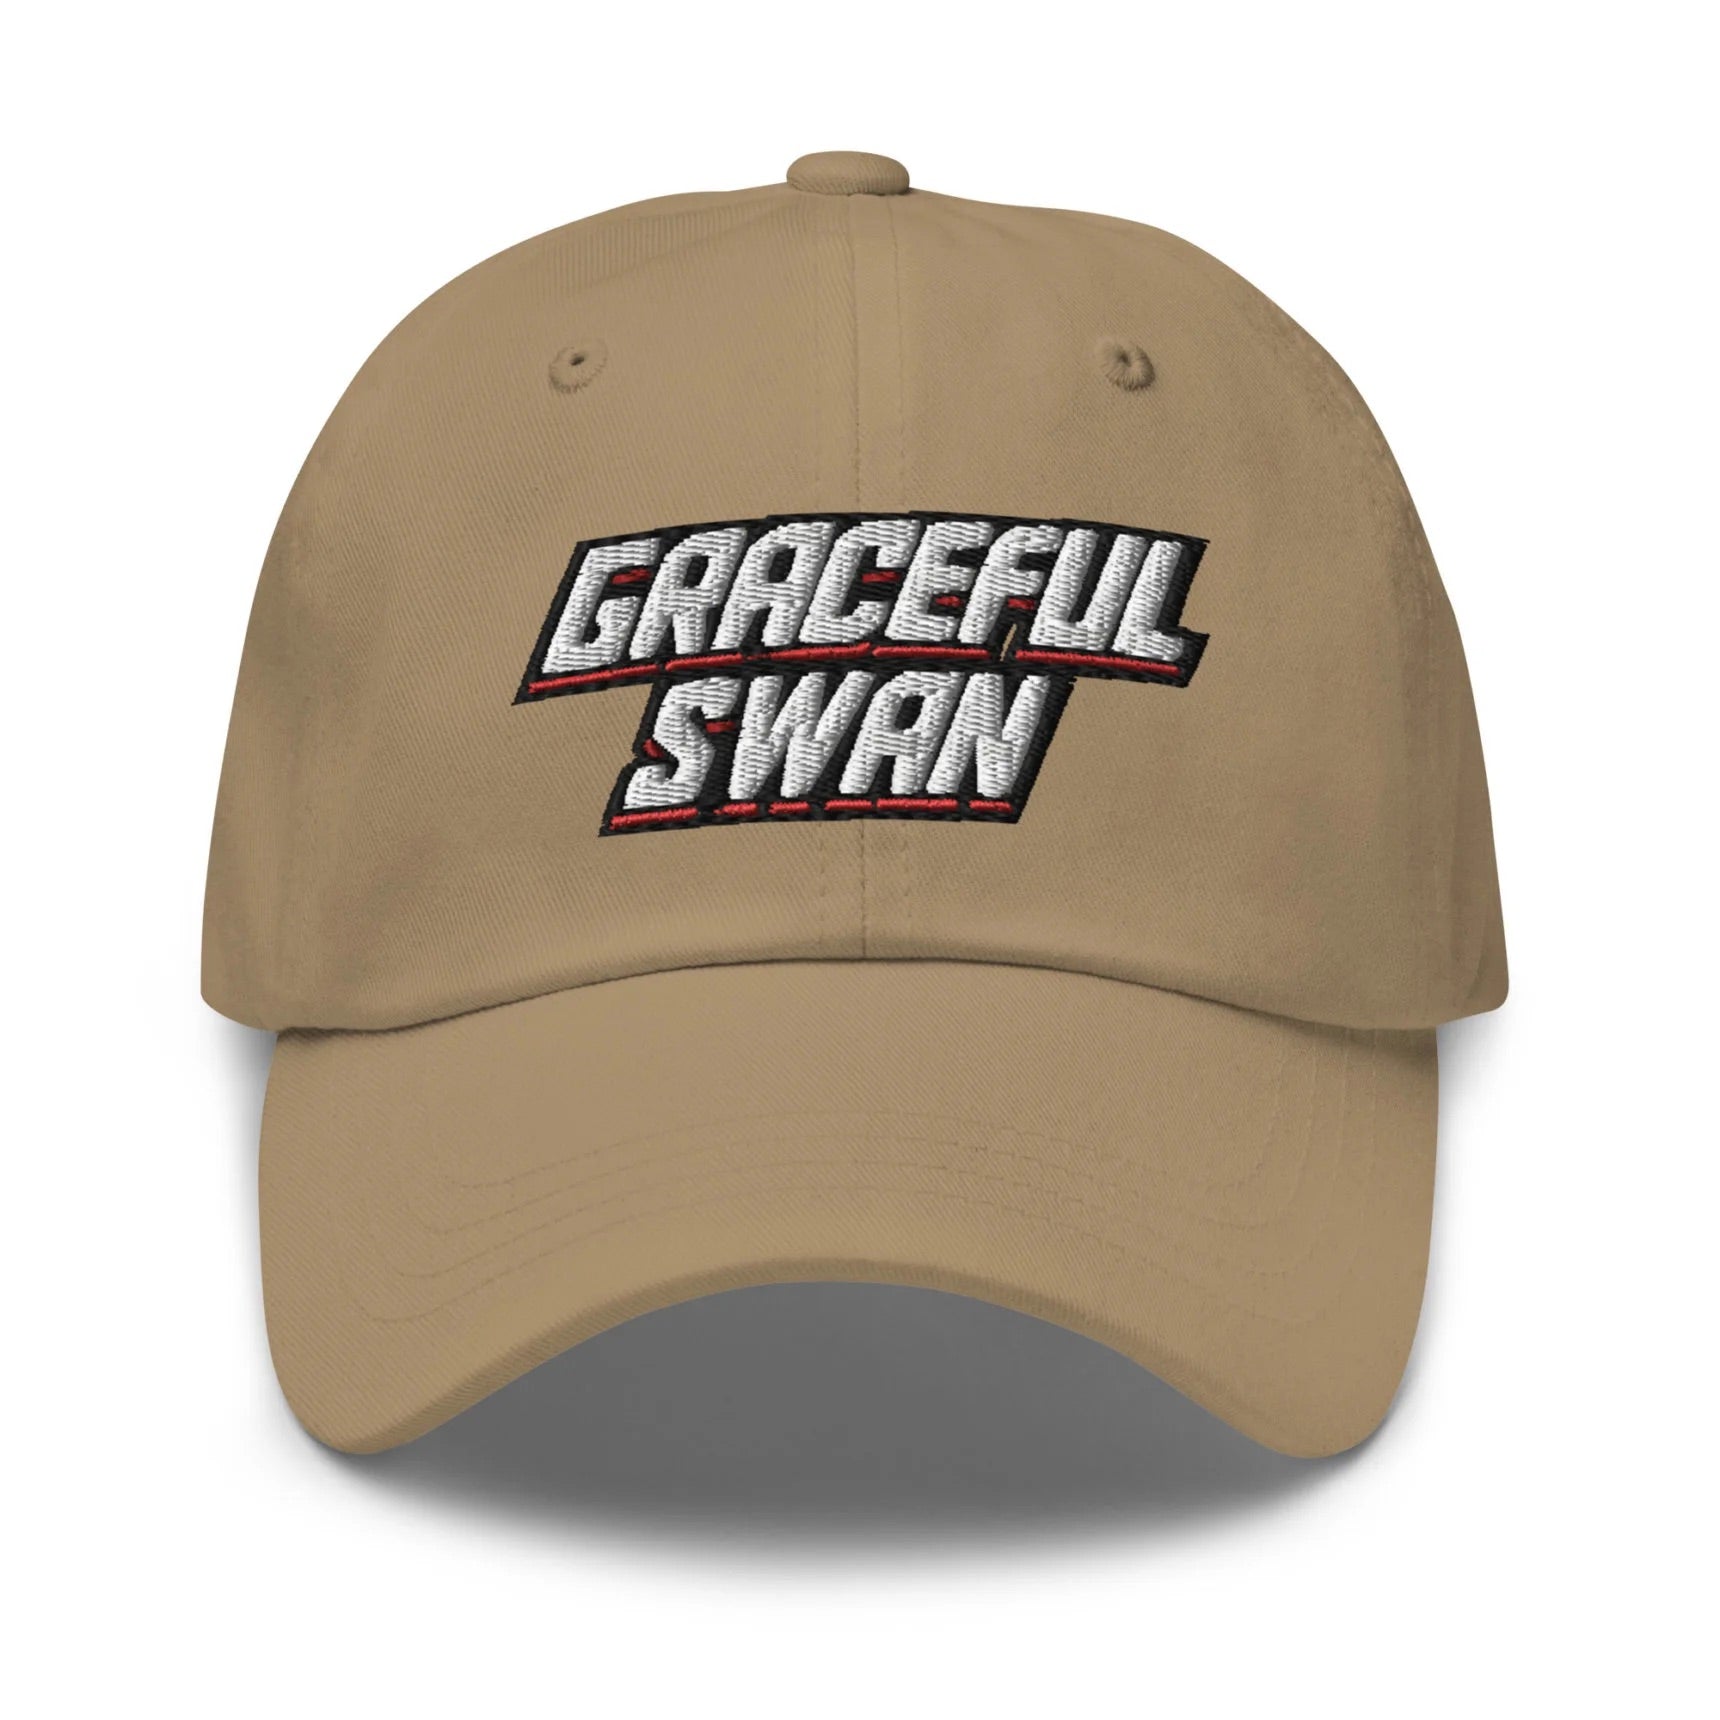 Graceful Swan ShowZone baseball dad hat in khaki